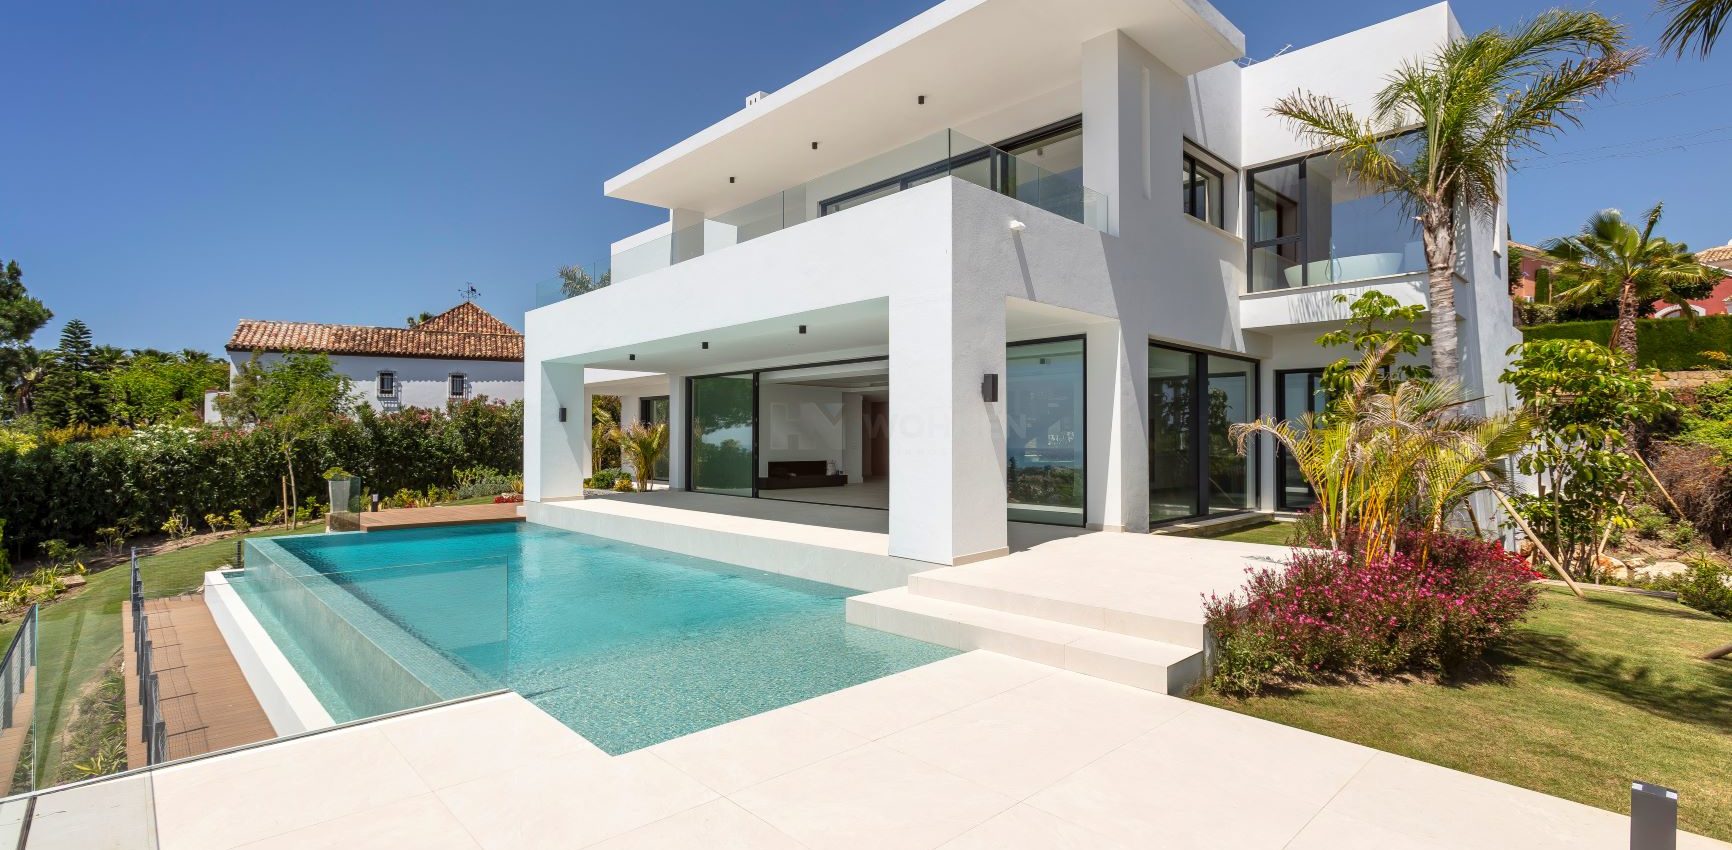 Spektakuläre, neu erbaute, moderne Villa mit atemberaubendem Panoramablick